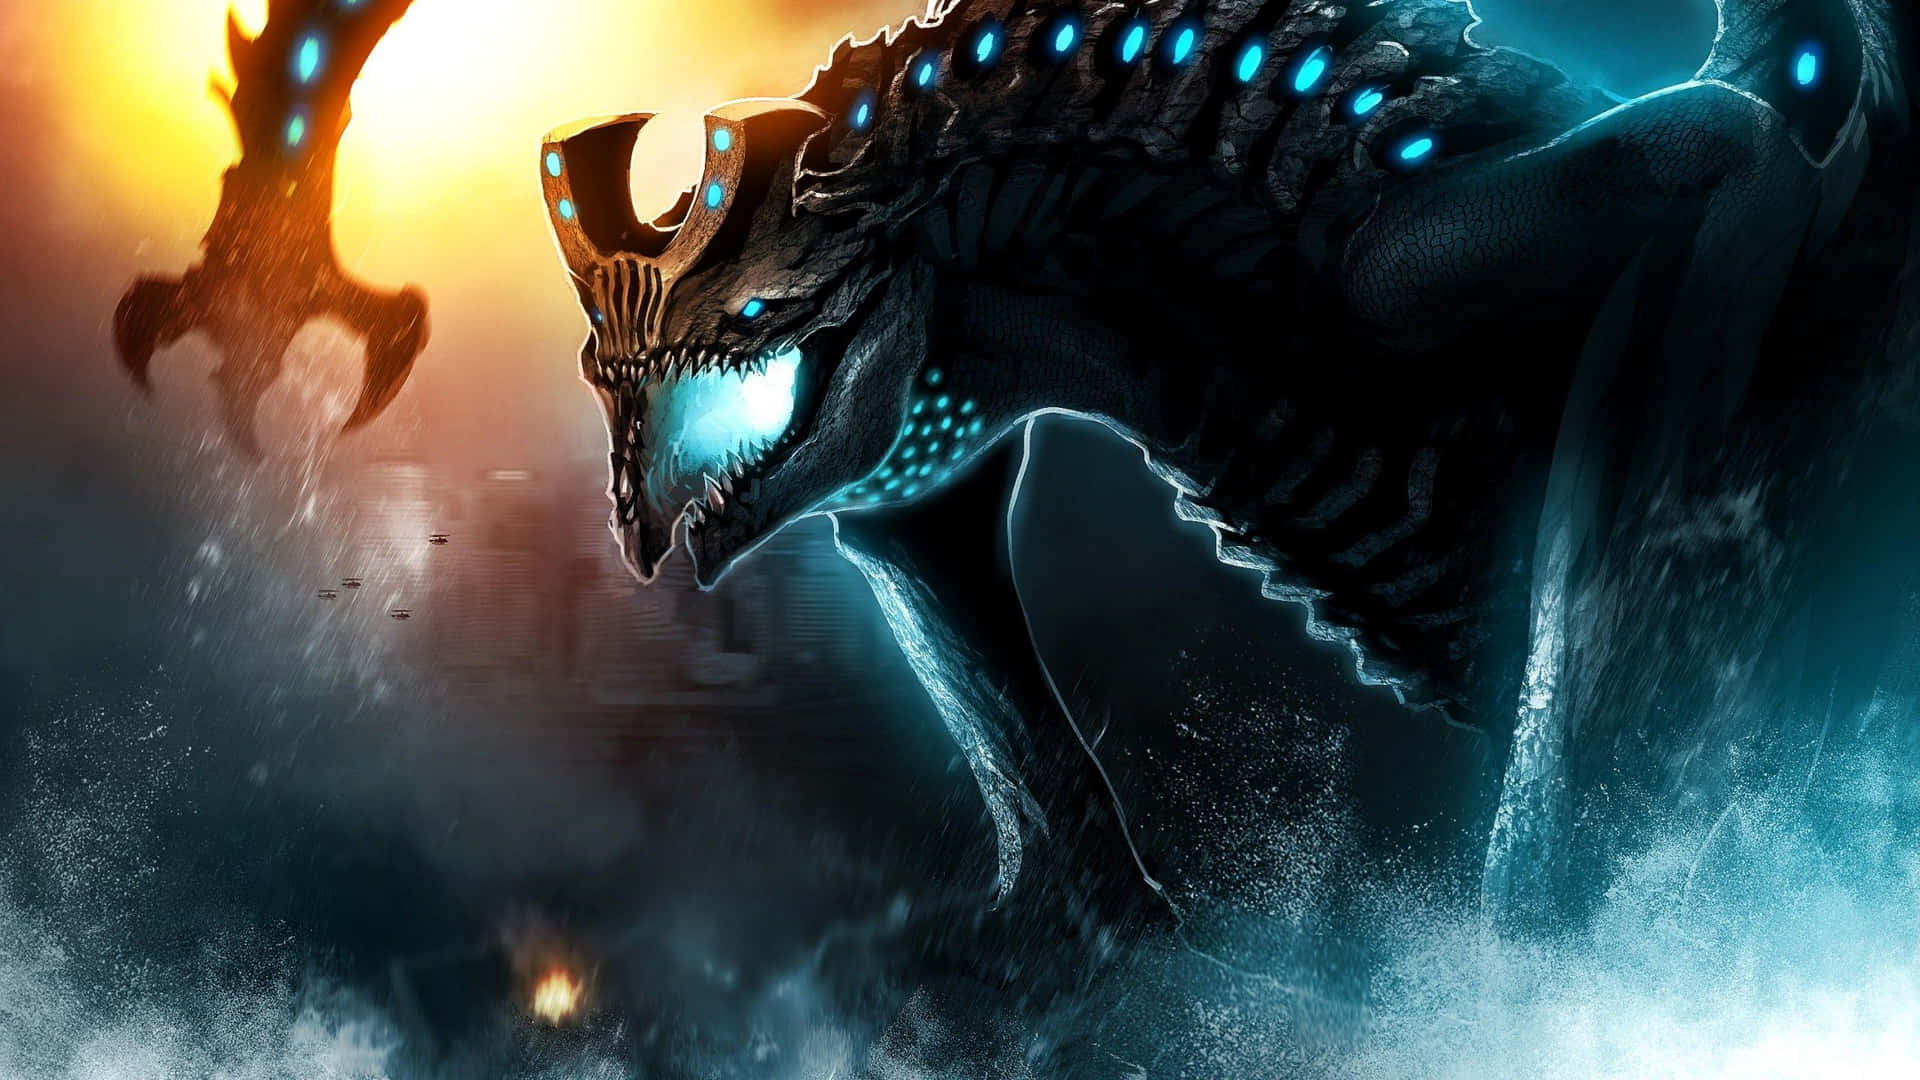 Radian, the Multidimensional Kaiju [Wallpaper] by nhociory on DeviantArt